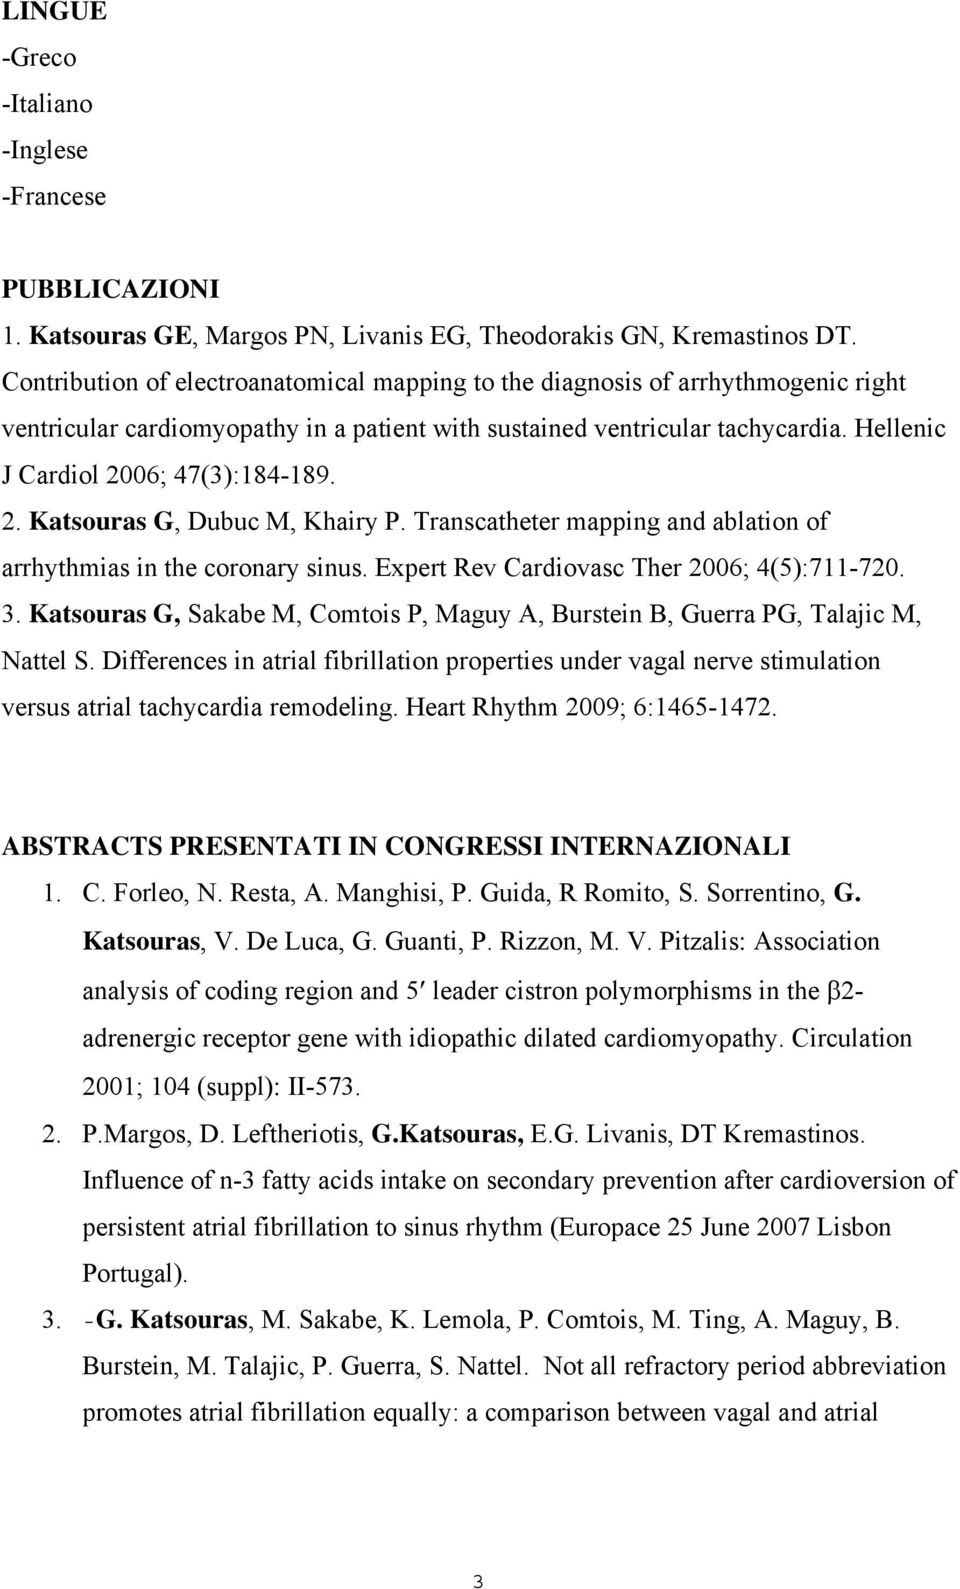 Hellenic J Cardiol 2006; 47(3):184-189. 2. Katsouras G, Dubuc M, Khairy P. Transcatheter mapping and ablation of arrhythmias in the coronary sinus. Expert Rev Cardiovasc Ther 2006; 4(5):711-720. 3.